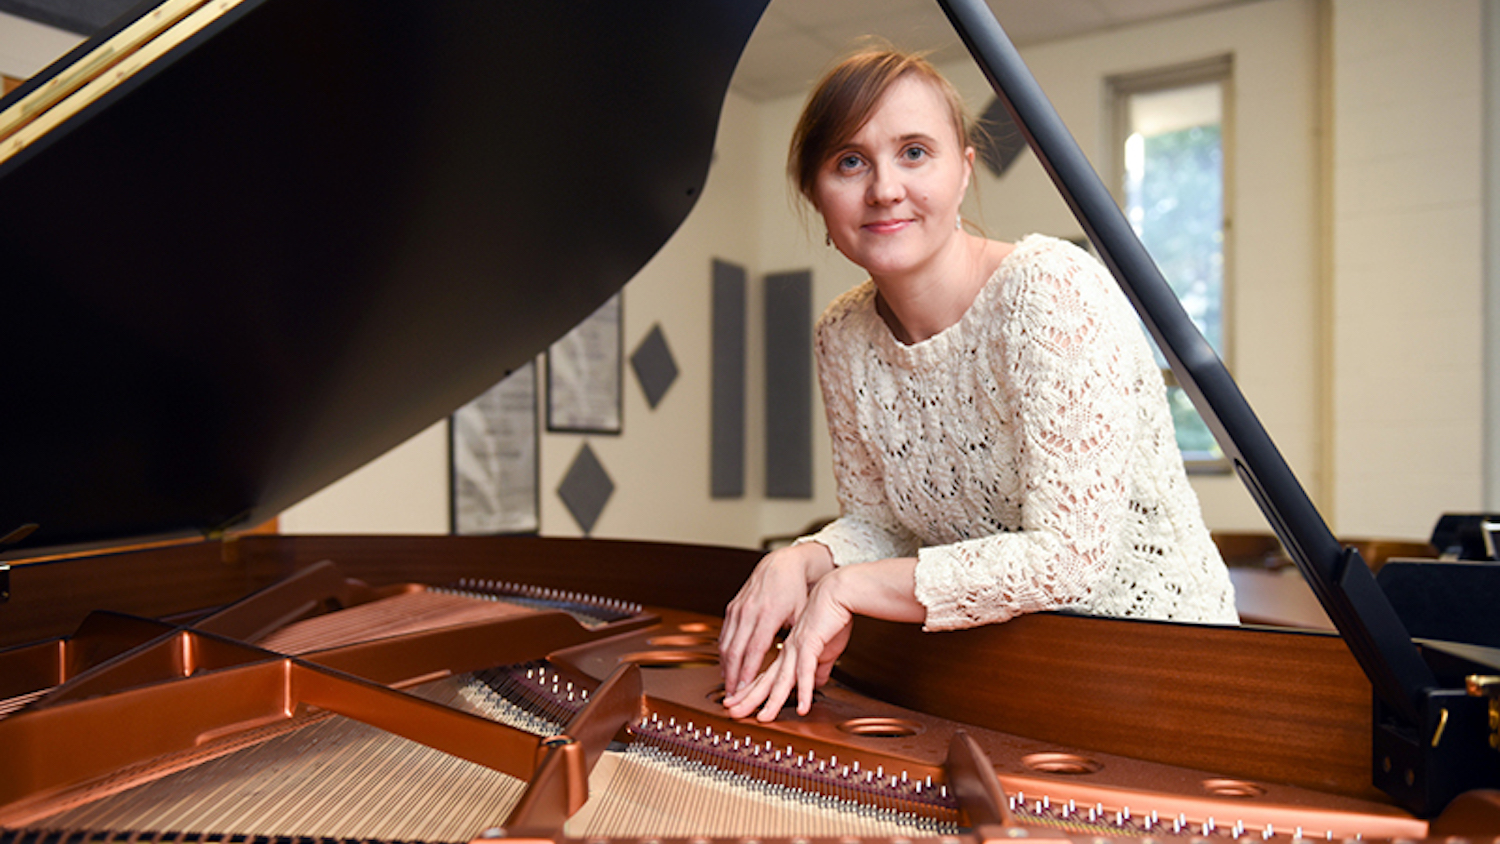 Associate teaching professor Olga Kleiankina, director of piano studies